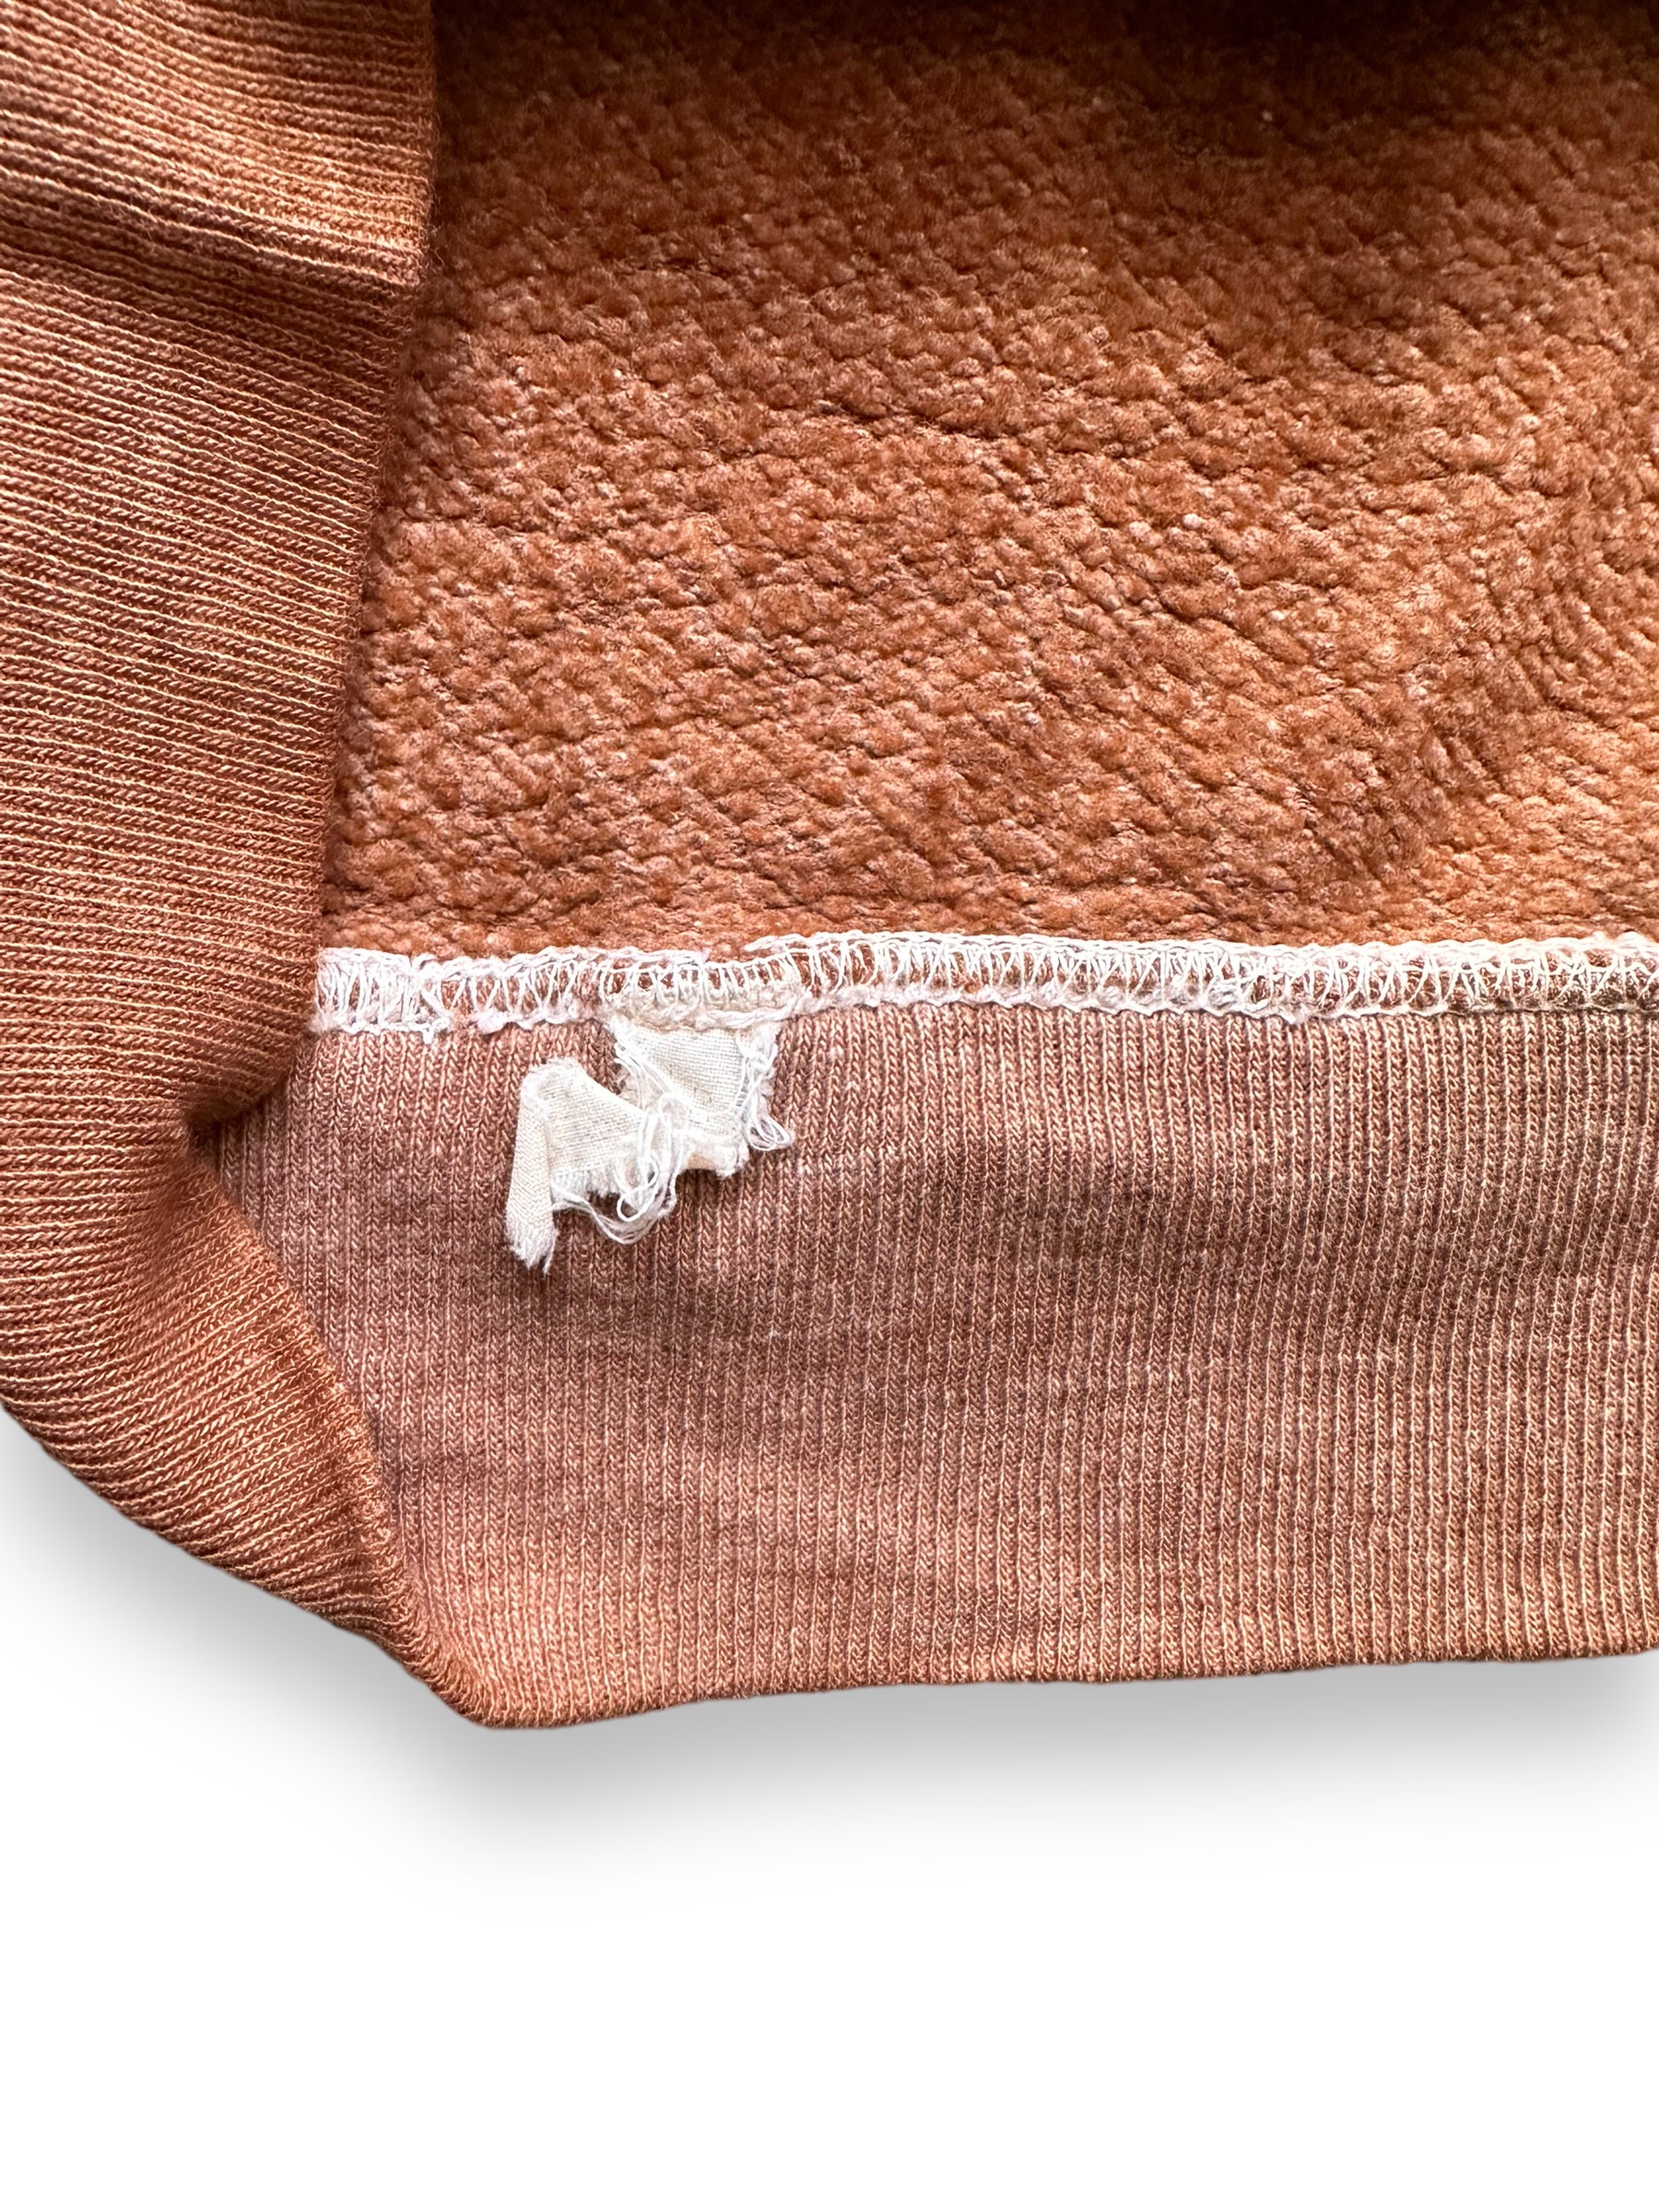 Obliterated Tag View of Vintage Brown Short Sleeve Crewneck Sweatshirt SZ M | Barn Owl Vintage Clothing | Seattle Vintage Sweatshirts